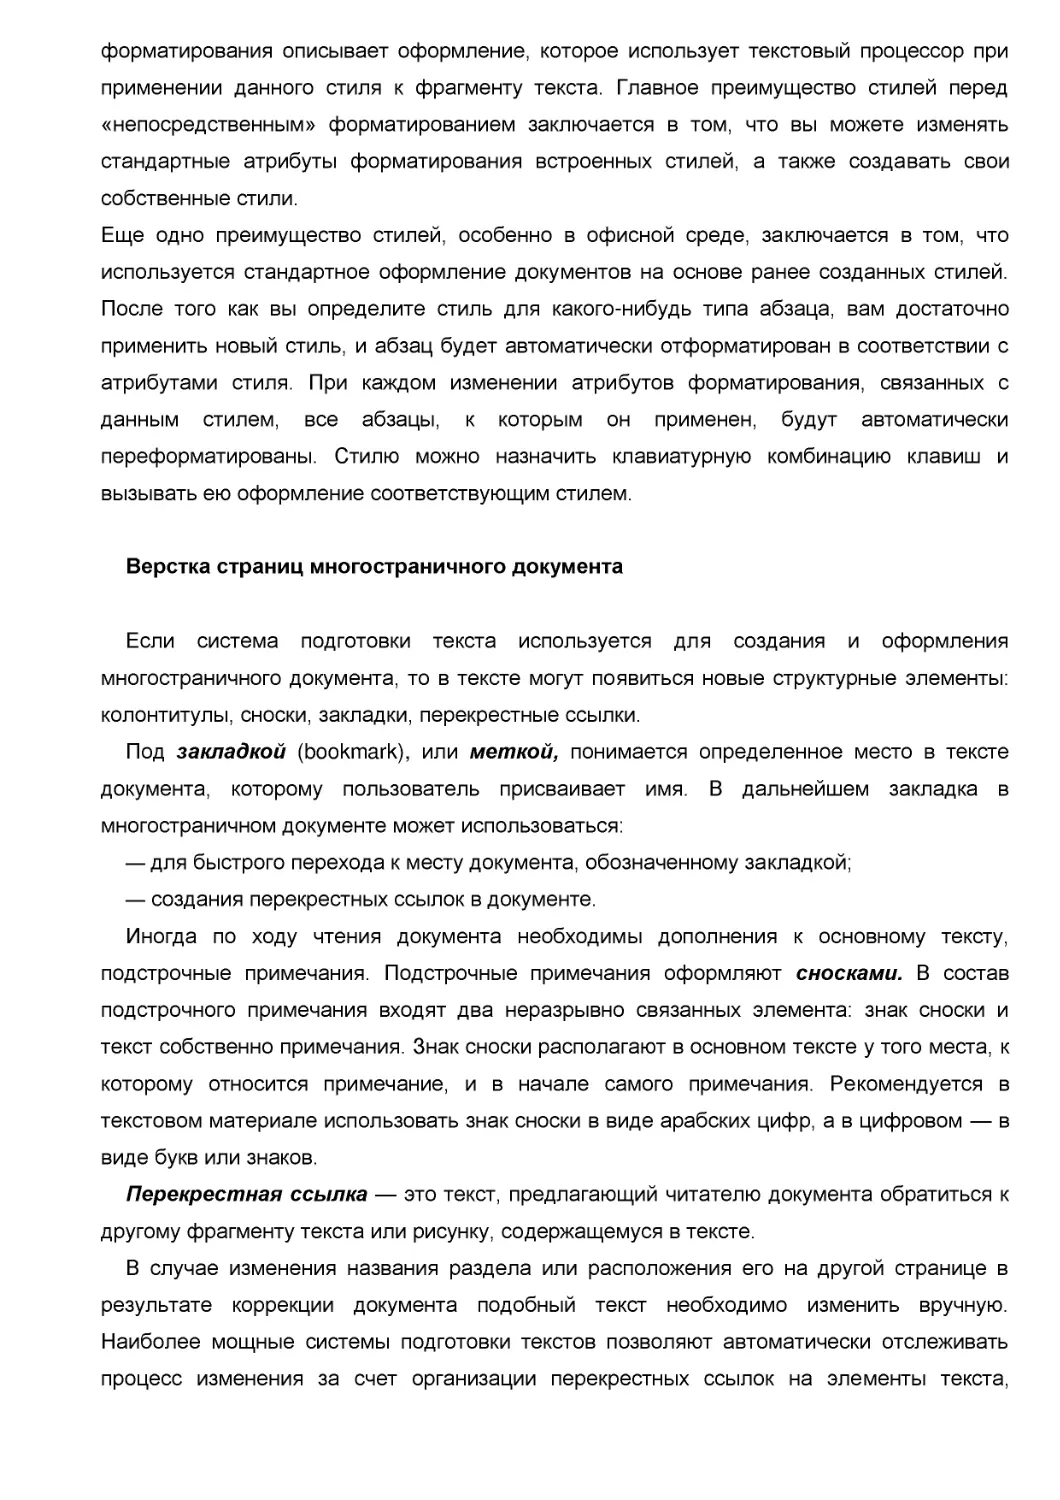 Верстка страниц многостраничного документа